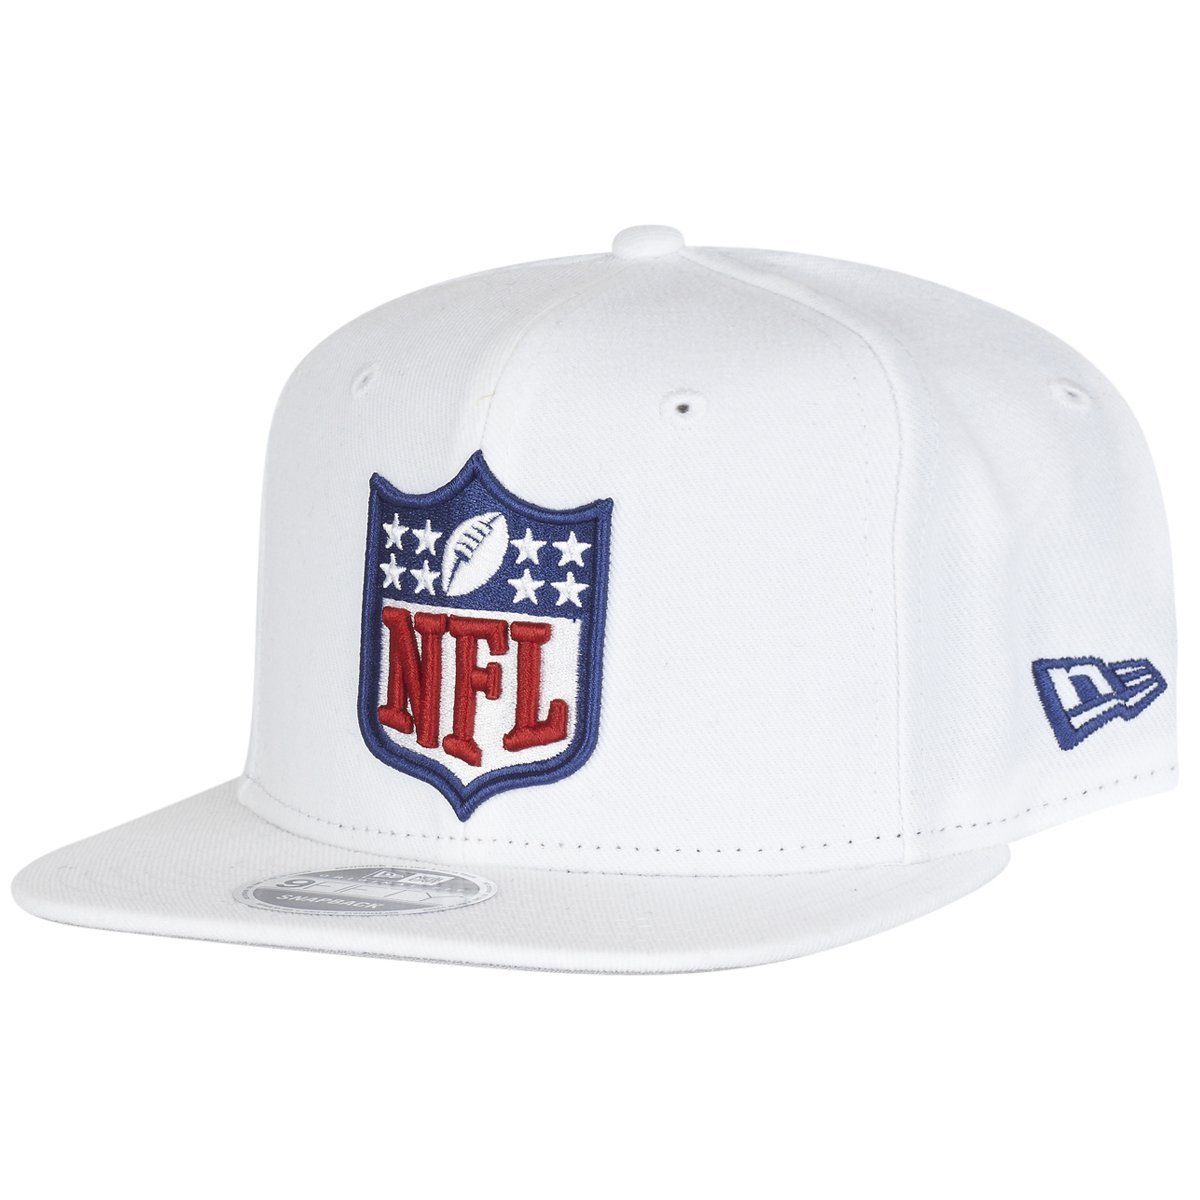 New Era Snapback Cap 9Fifty NFL Shield online kaufen | OTTO